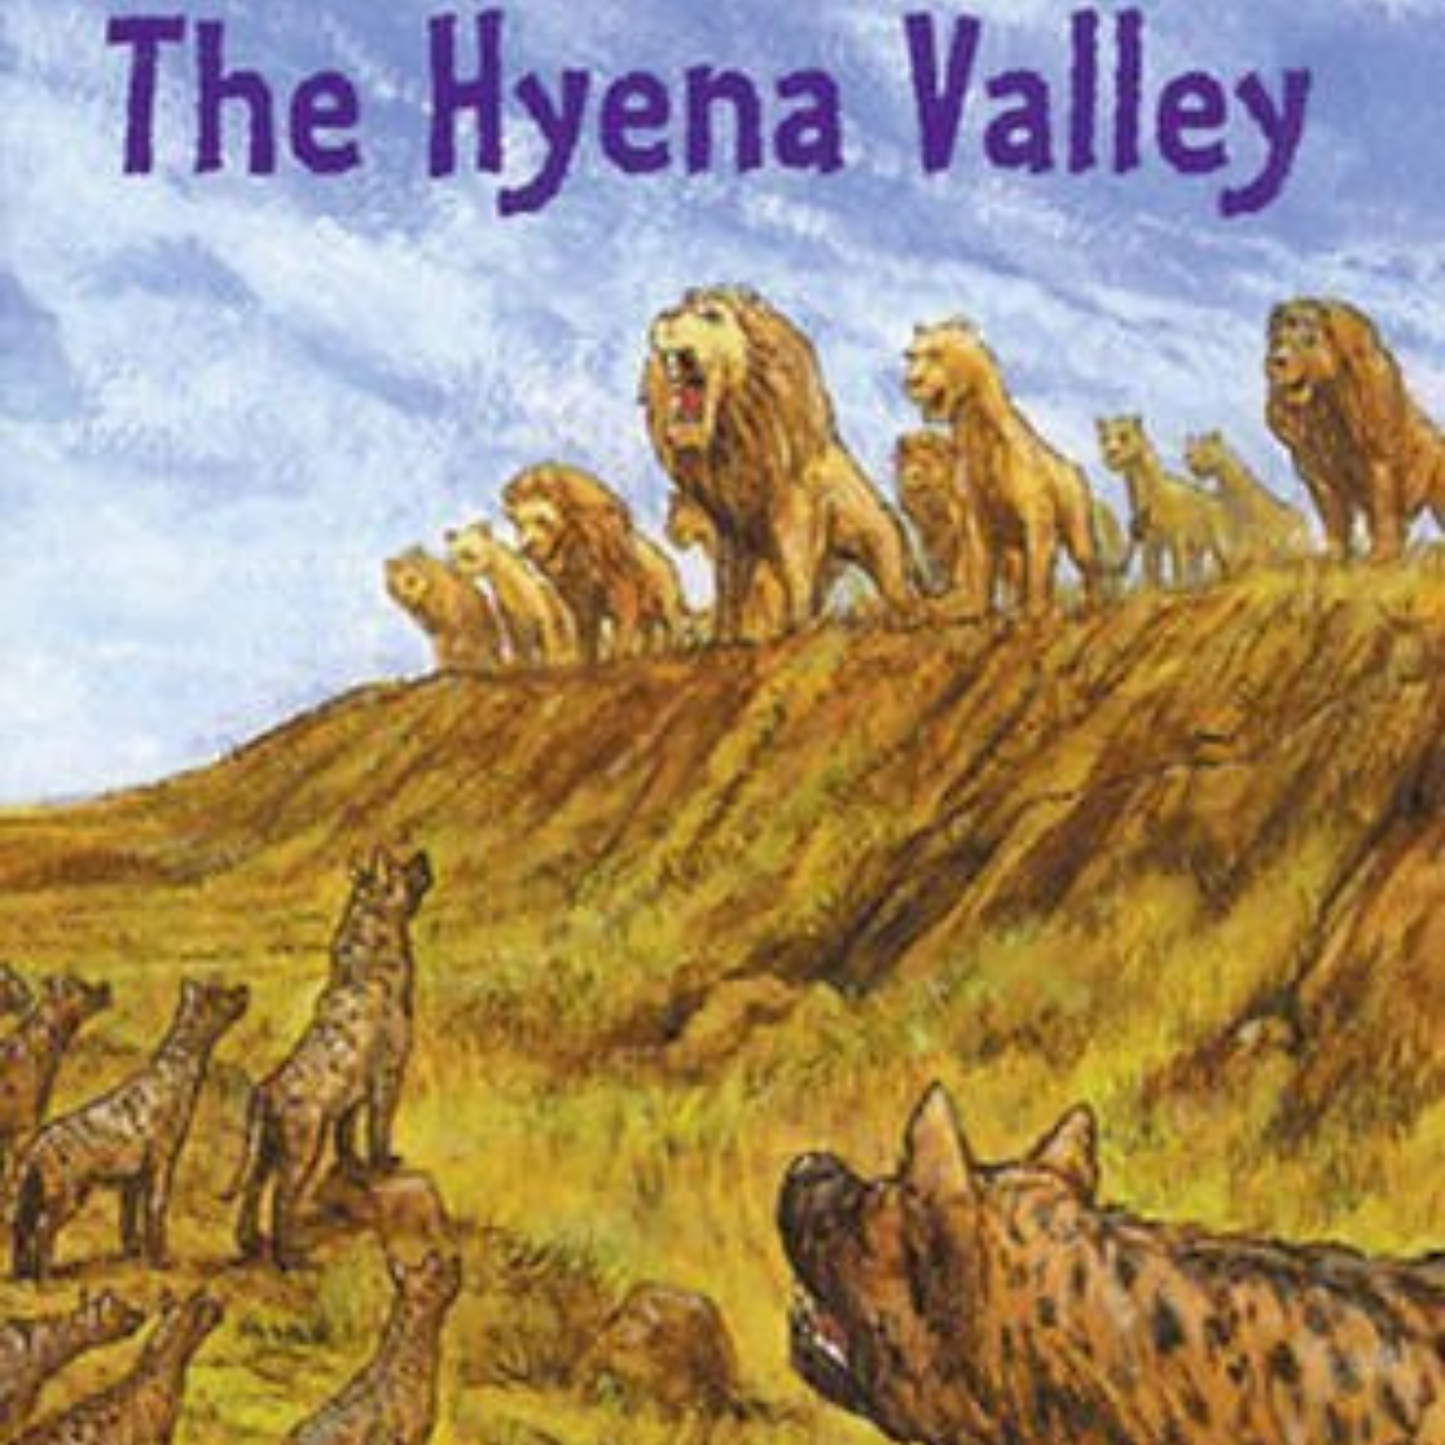 The Hyena Valley